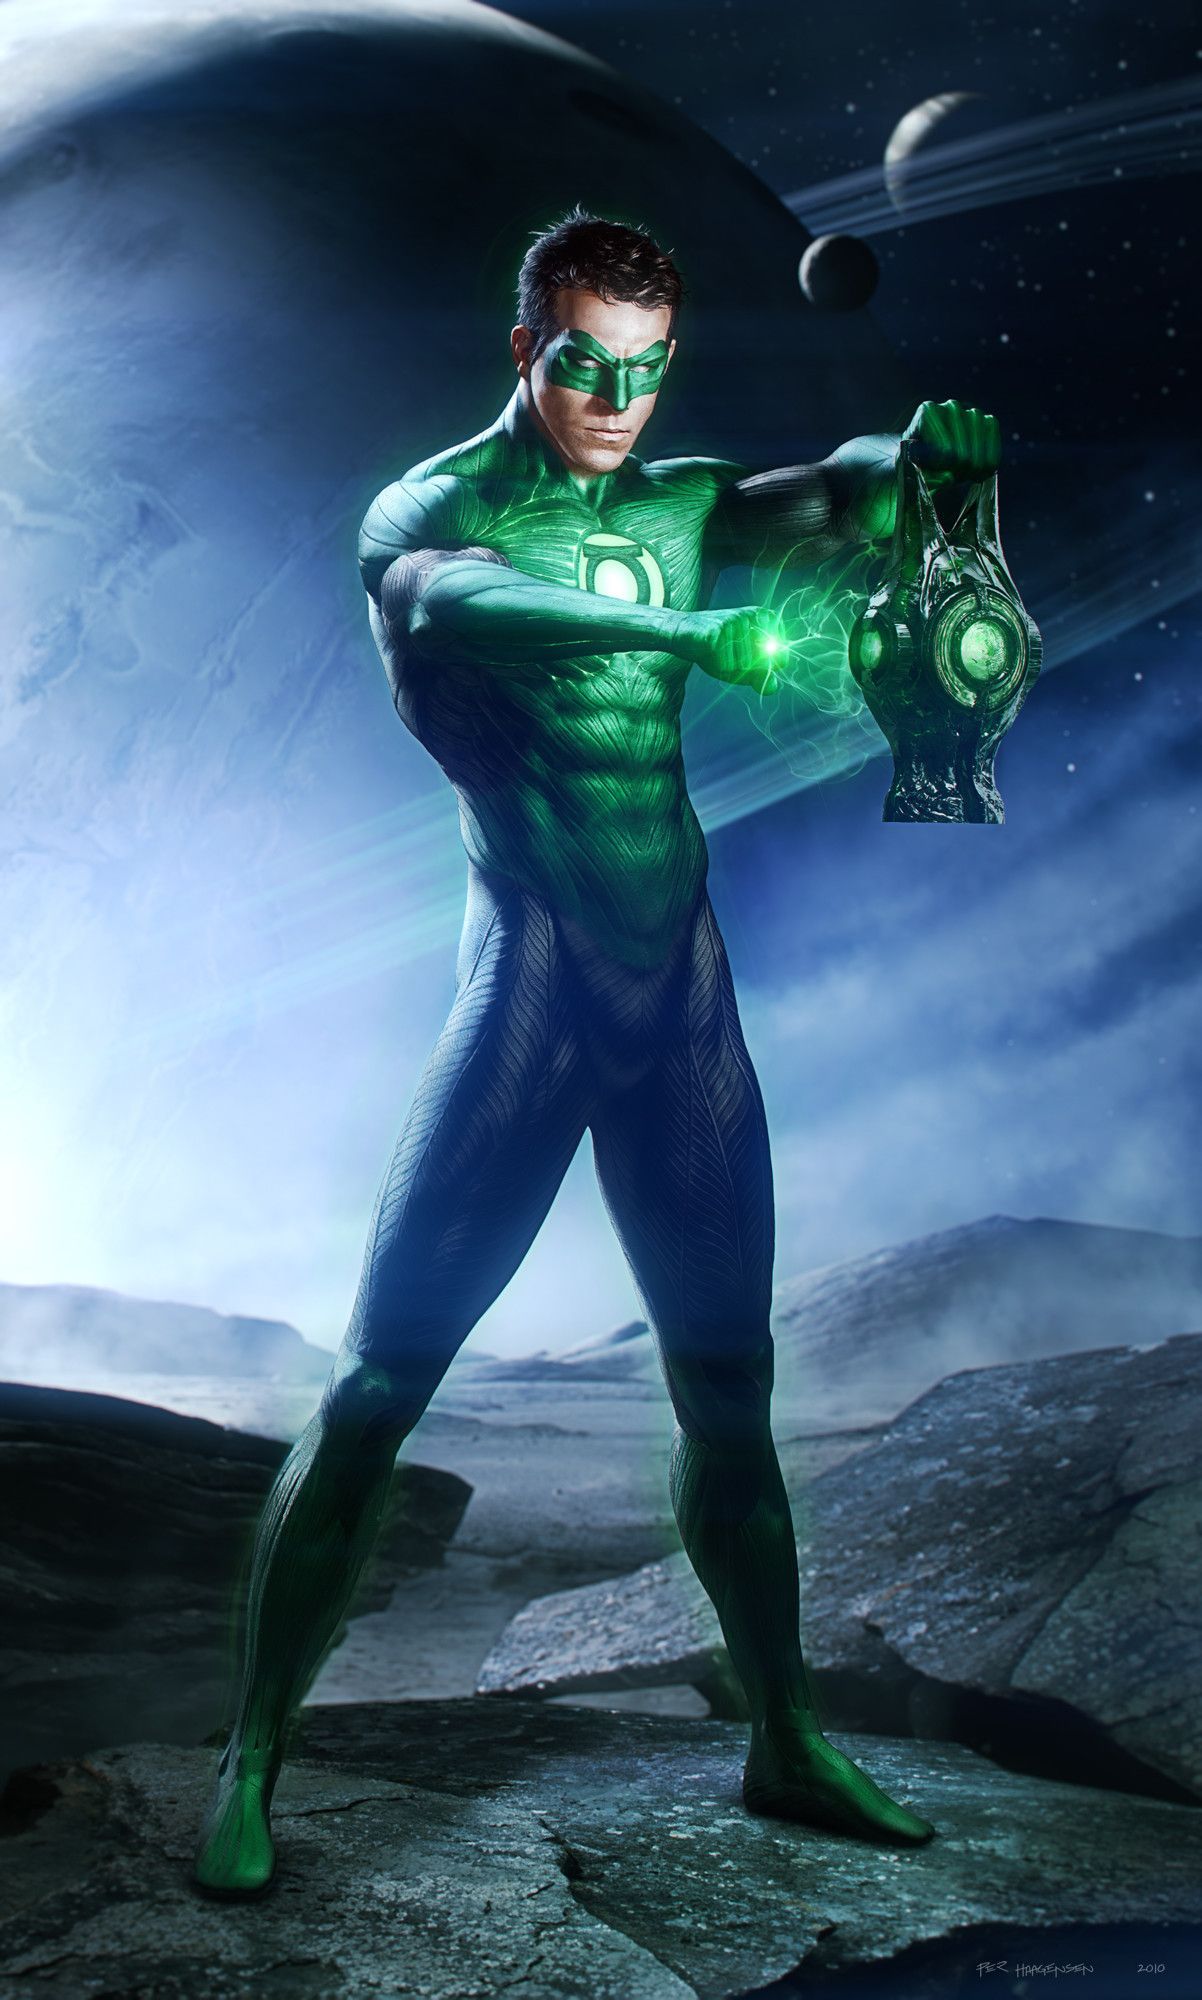 Green Lantern (2011) Artwork Featuring Hal Jordan & Kilowog. Green lantern movie, Green lantern Green lantern hal jordan